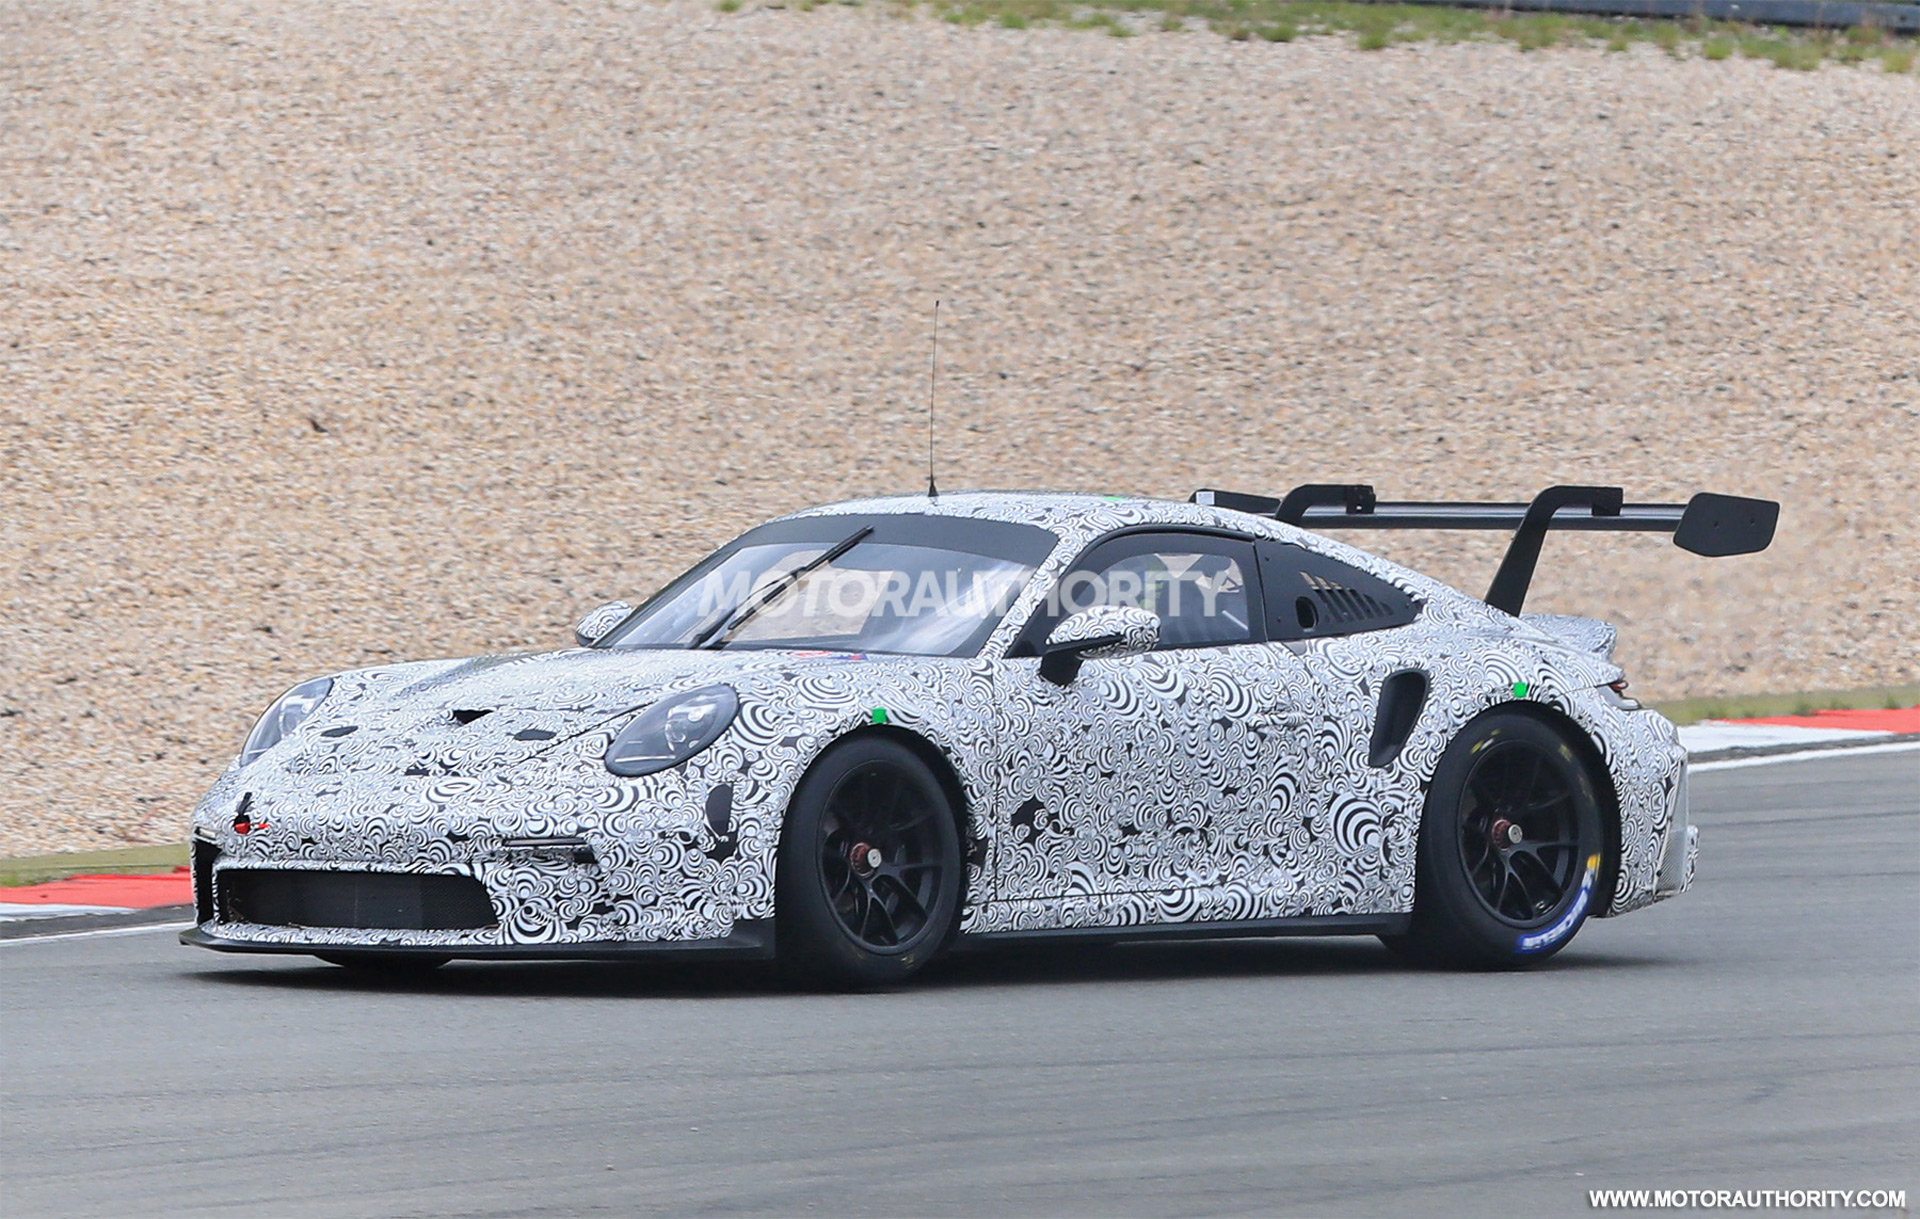 2022 Porsche 911 GT3 R race car spy shots - Photo credit: S. Baldauf/SB-Medien